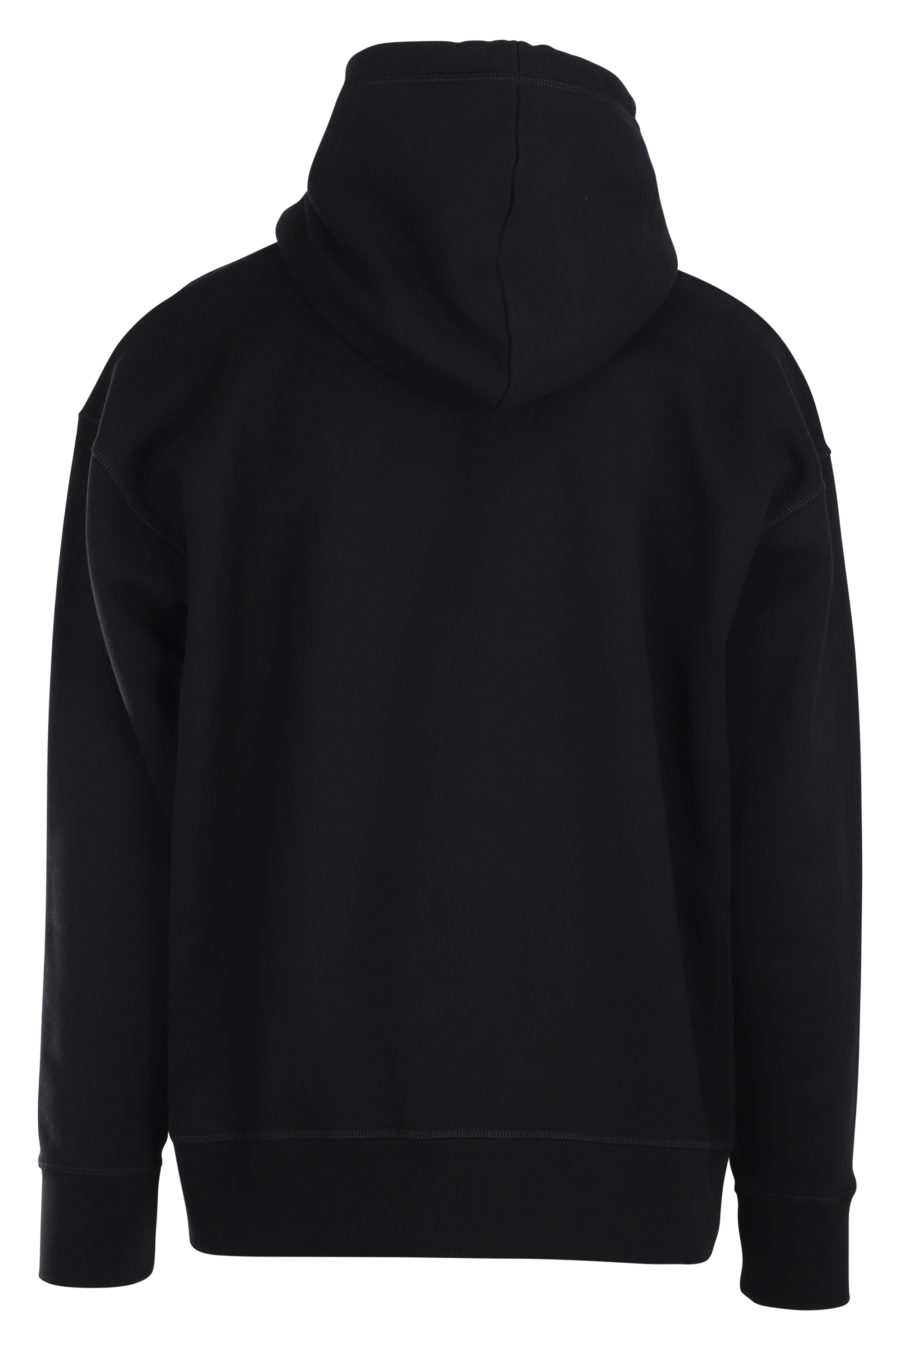 Sudadera negra con capucha y logo blanco "bromance" - IMG 9898